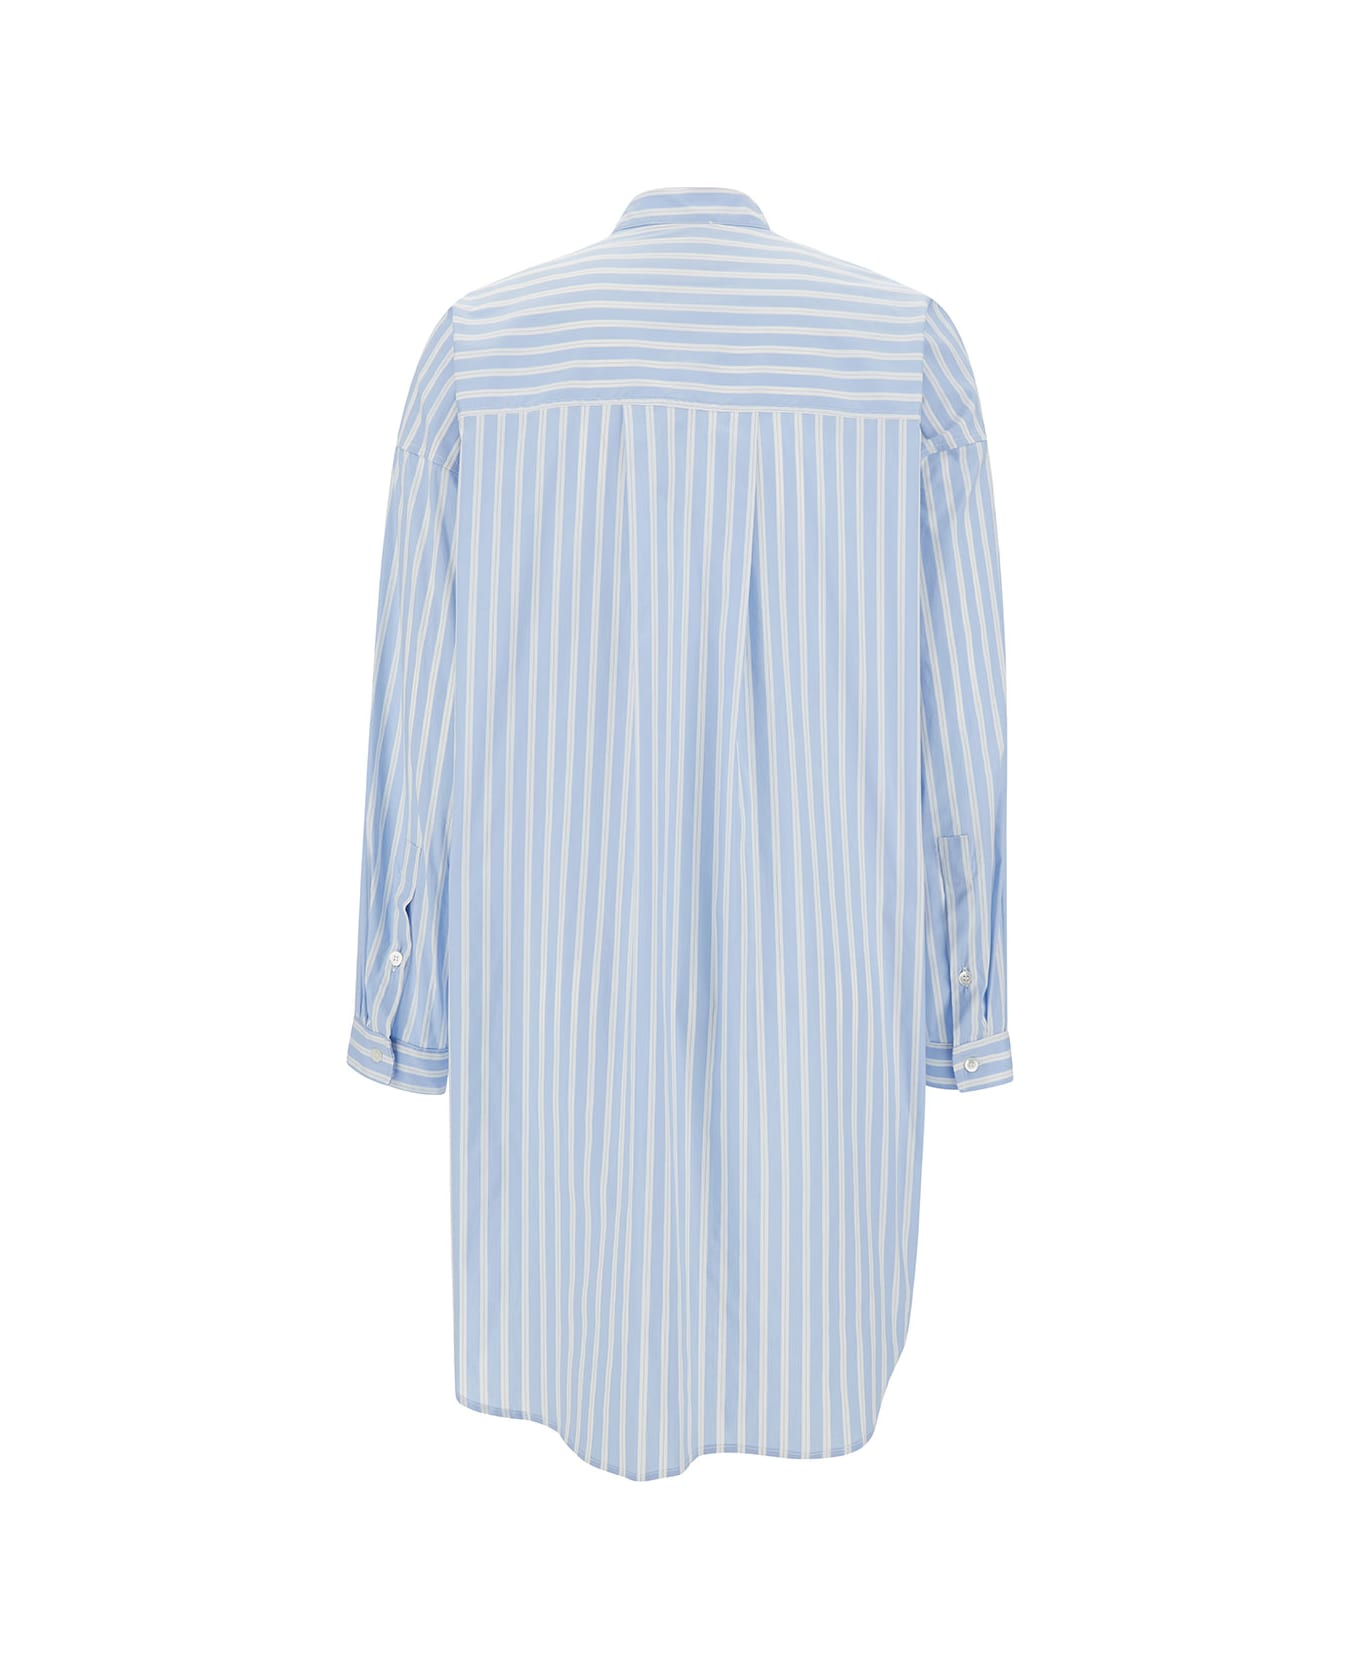 SEMICOUTURE Mini Light Blue Shirt Dress With Stripe Motif In Cotton Blend Woman - Light blue